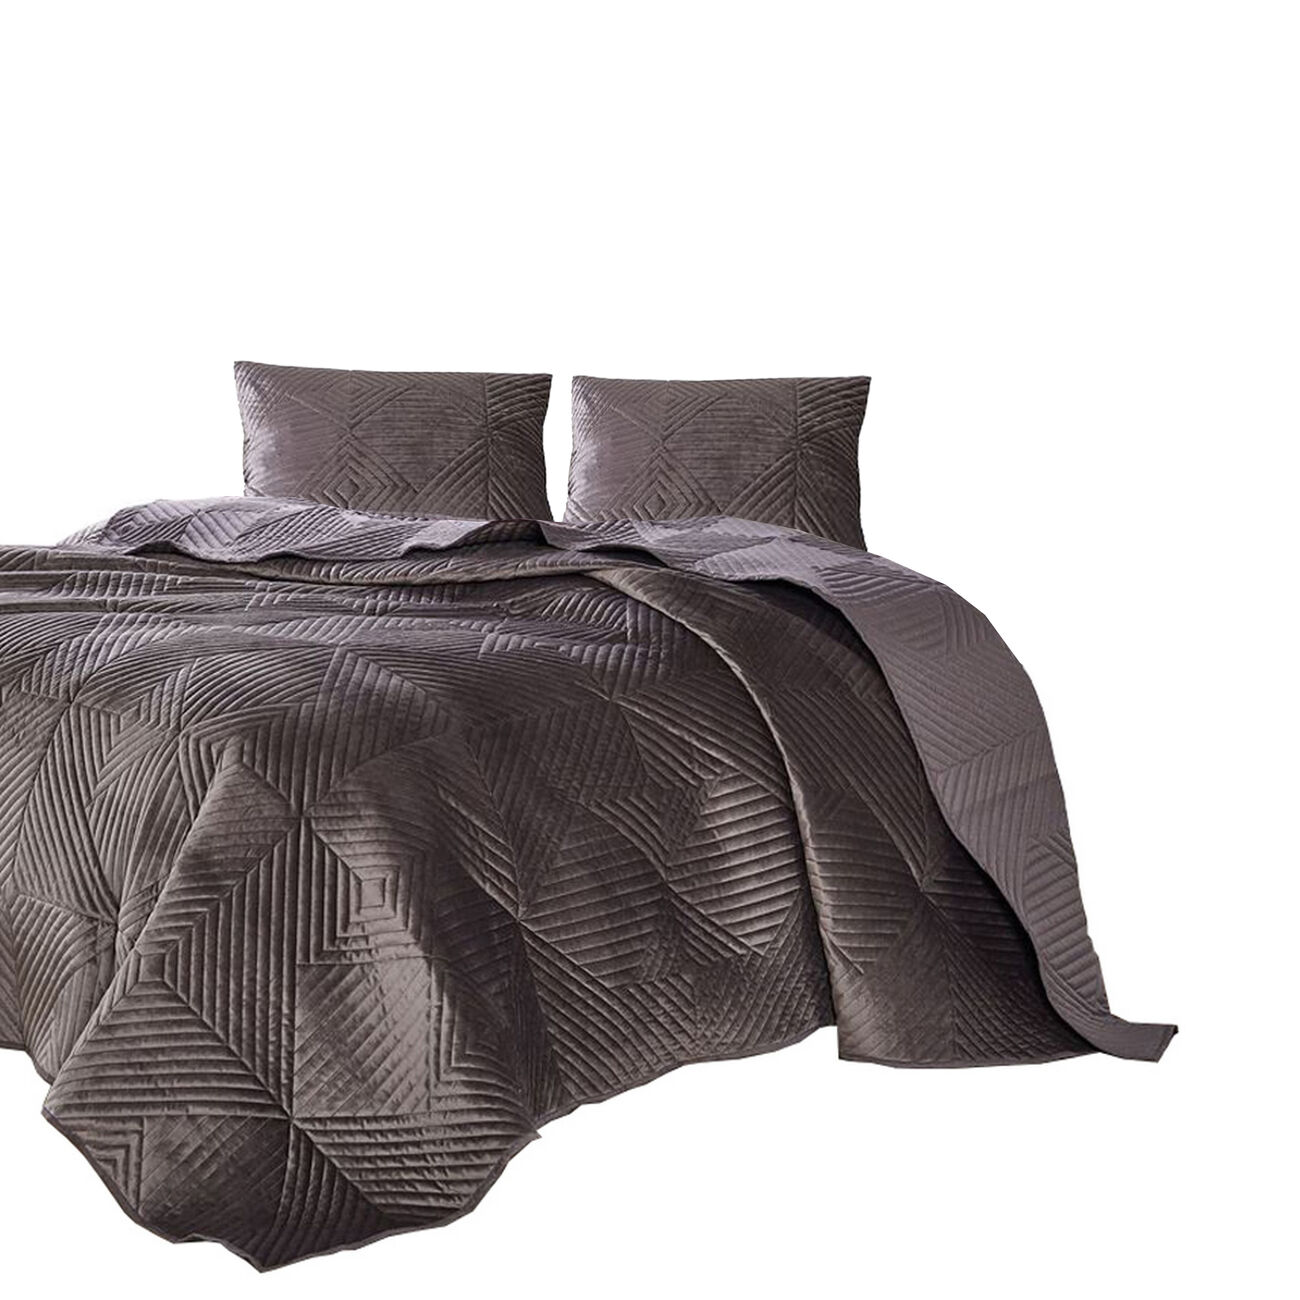 Bann 3 Piece Full Quilt Set with Geometric Design, Gray